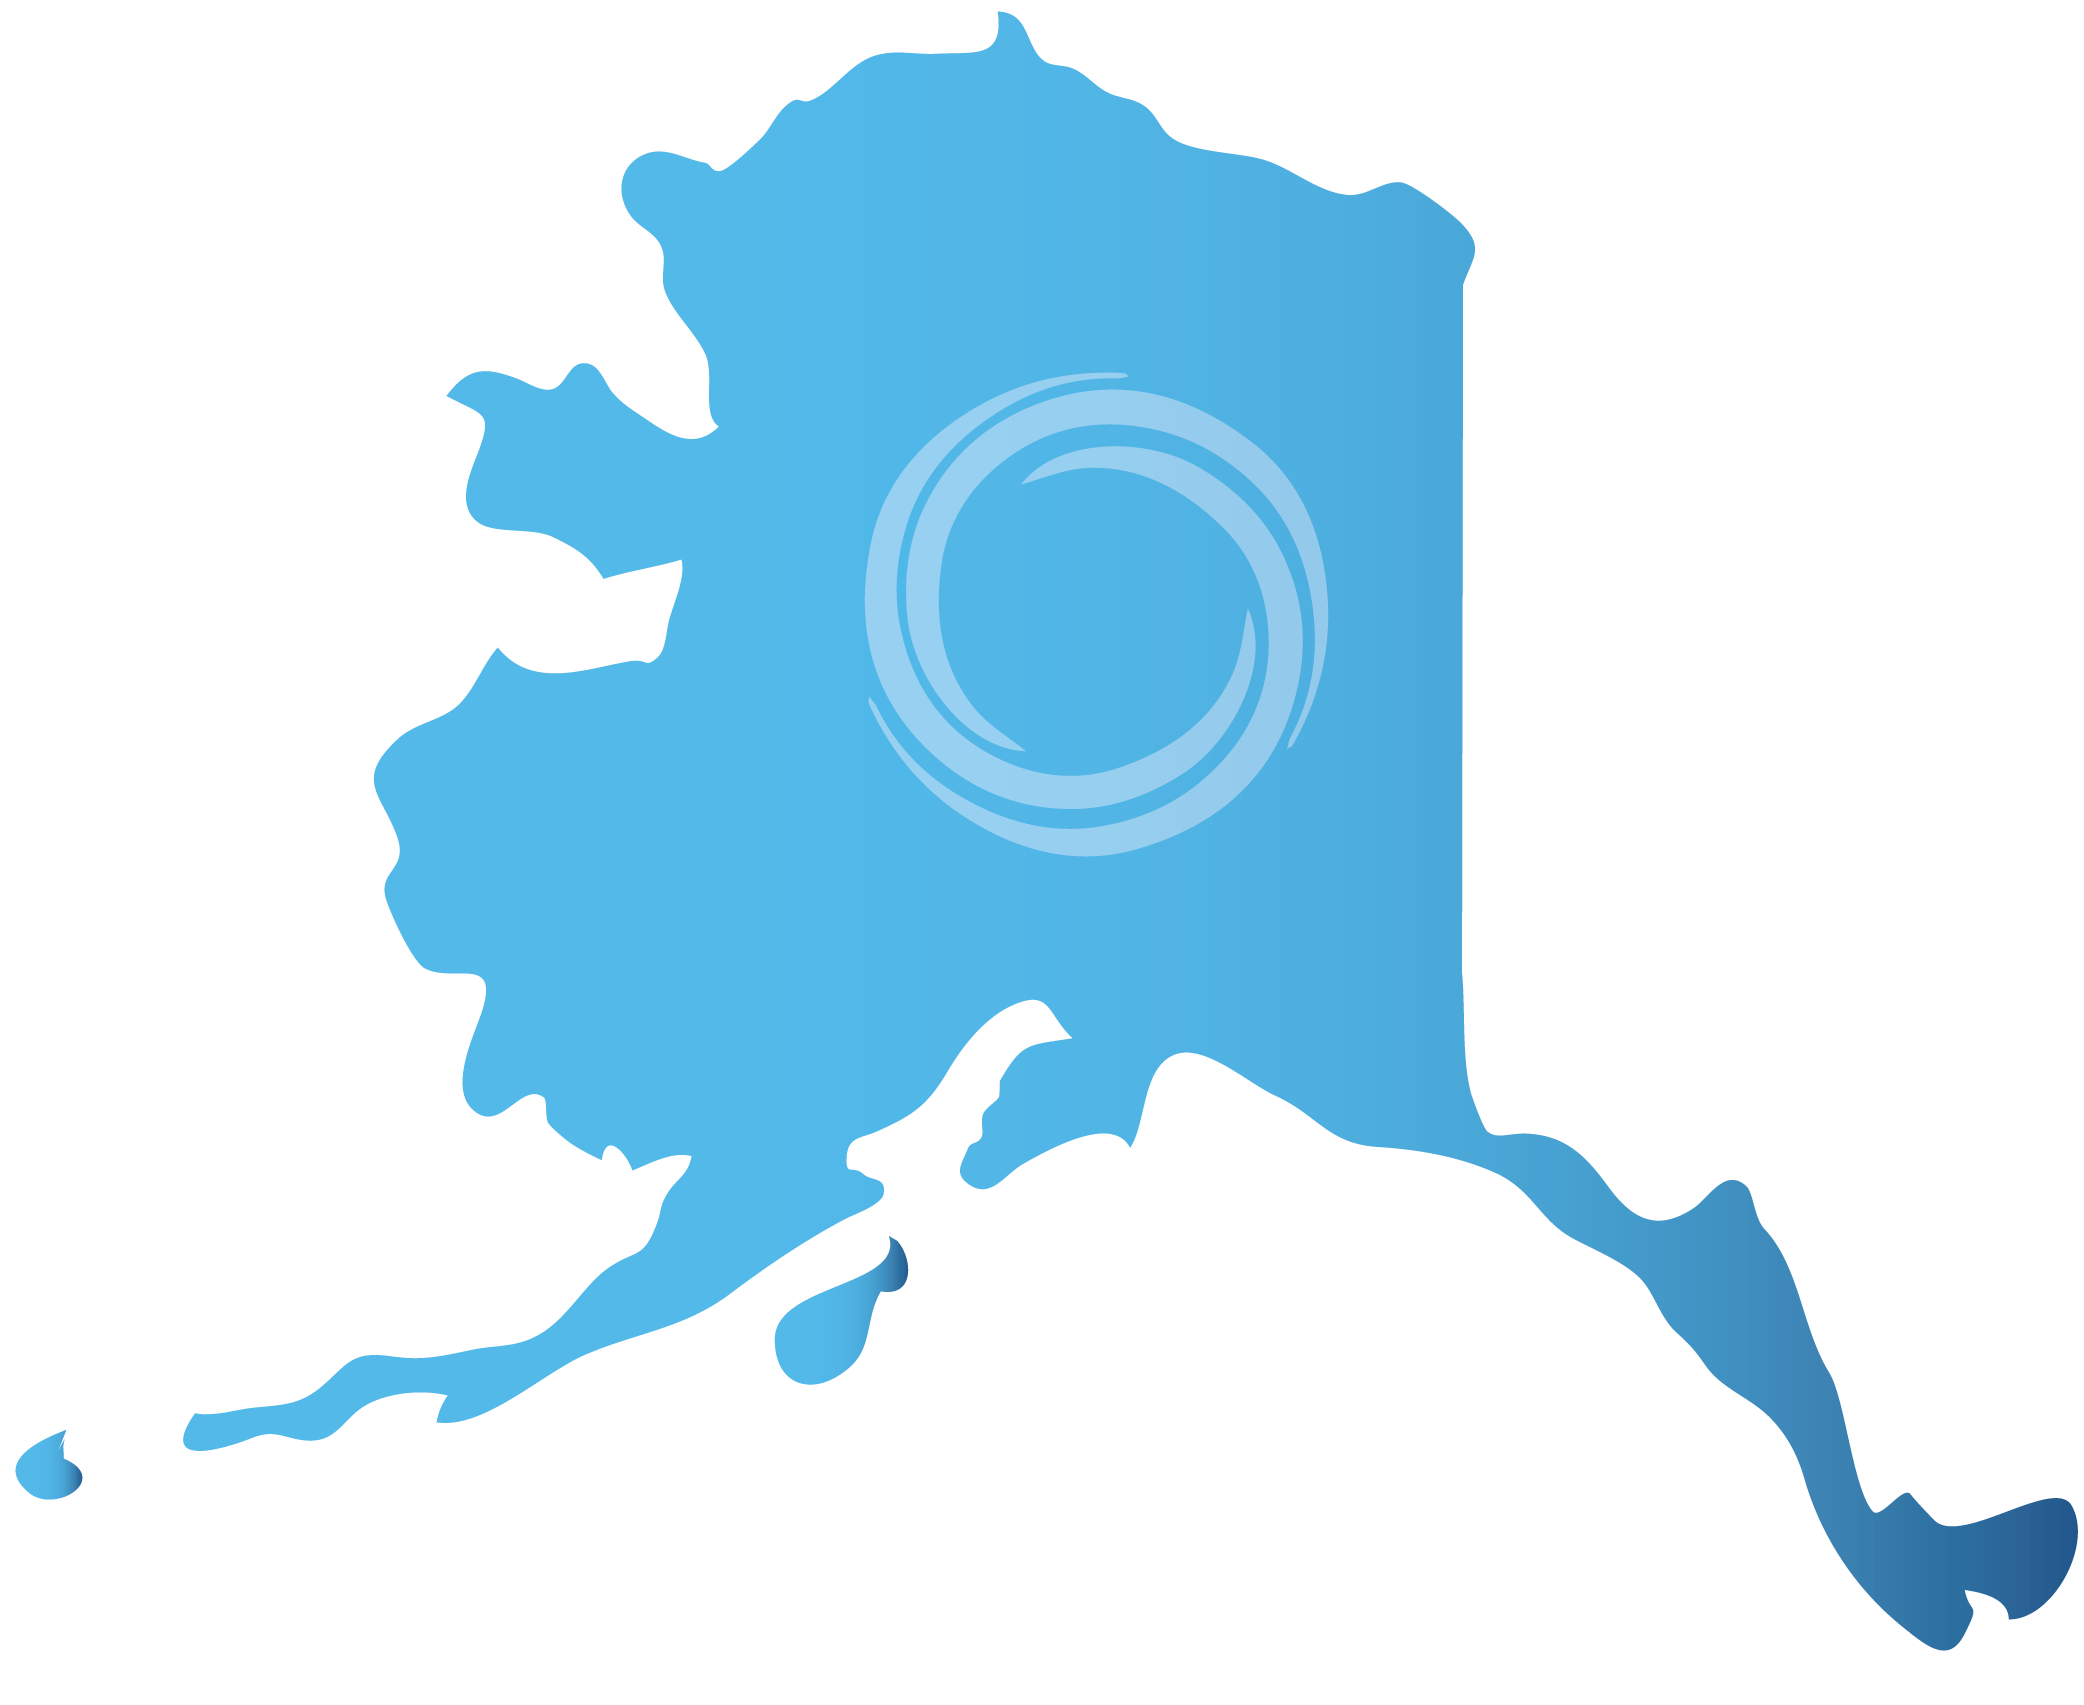 Alaska with bsi's logo on top